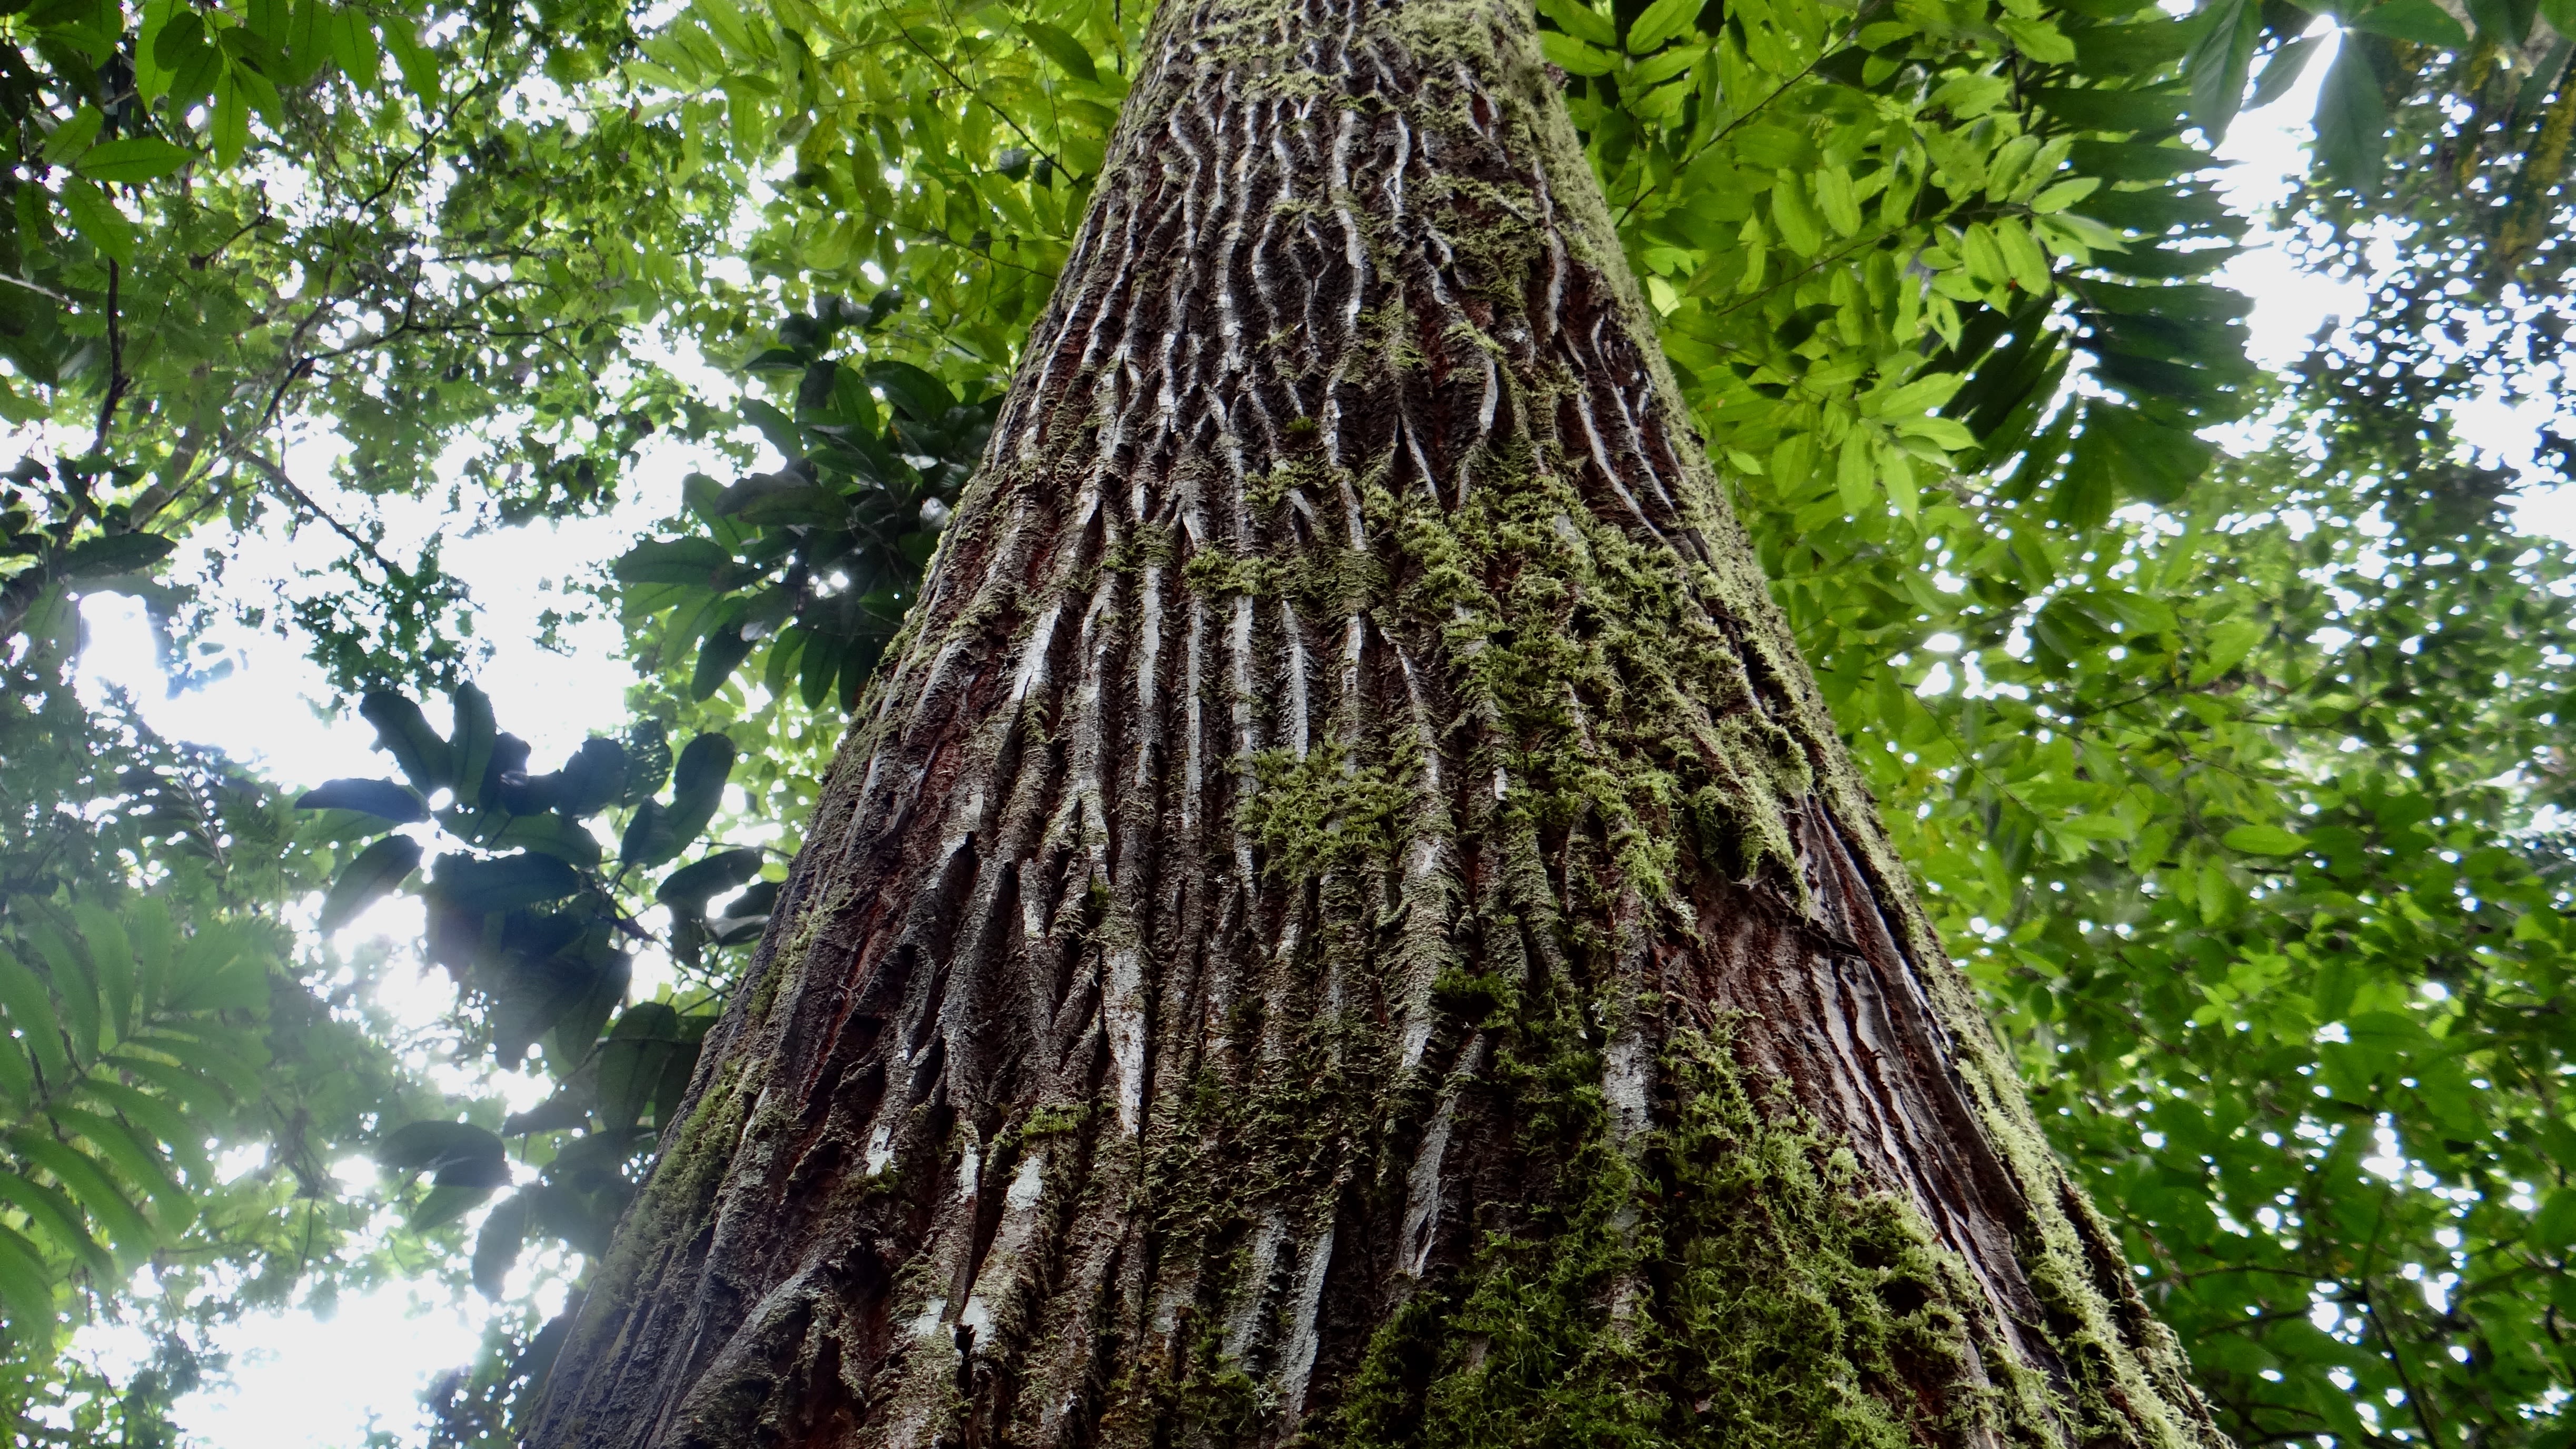 rainforest trees